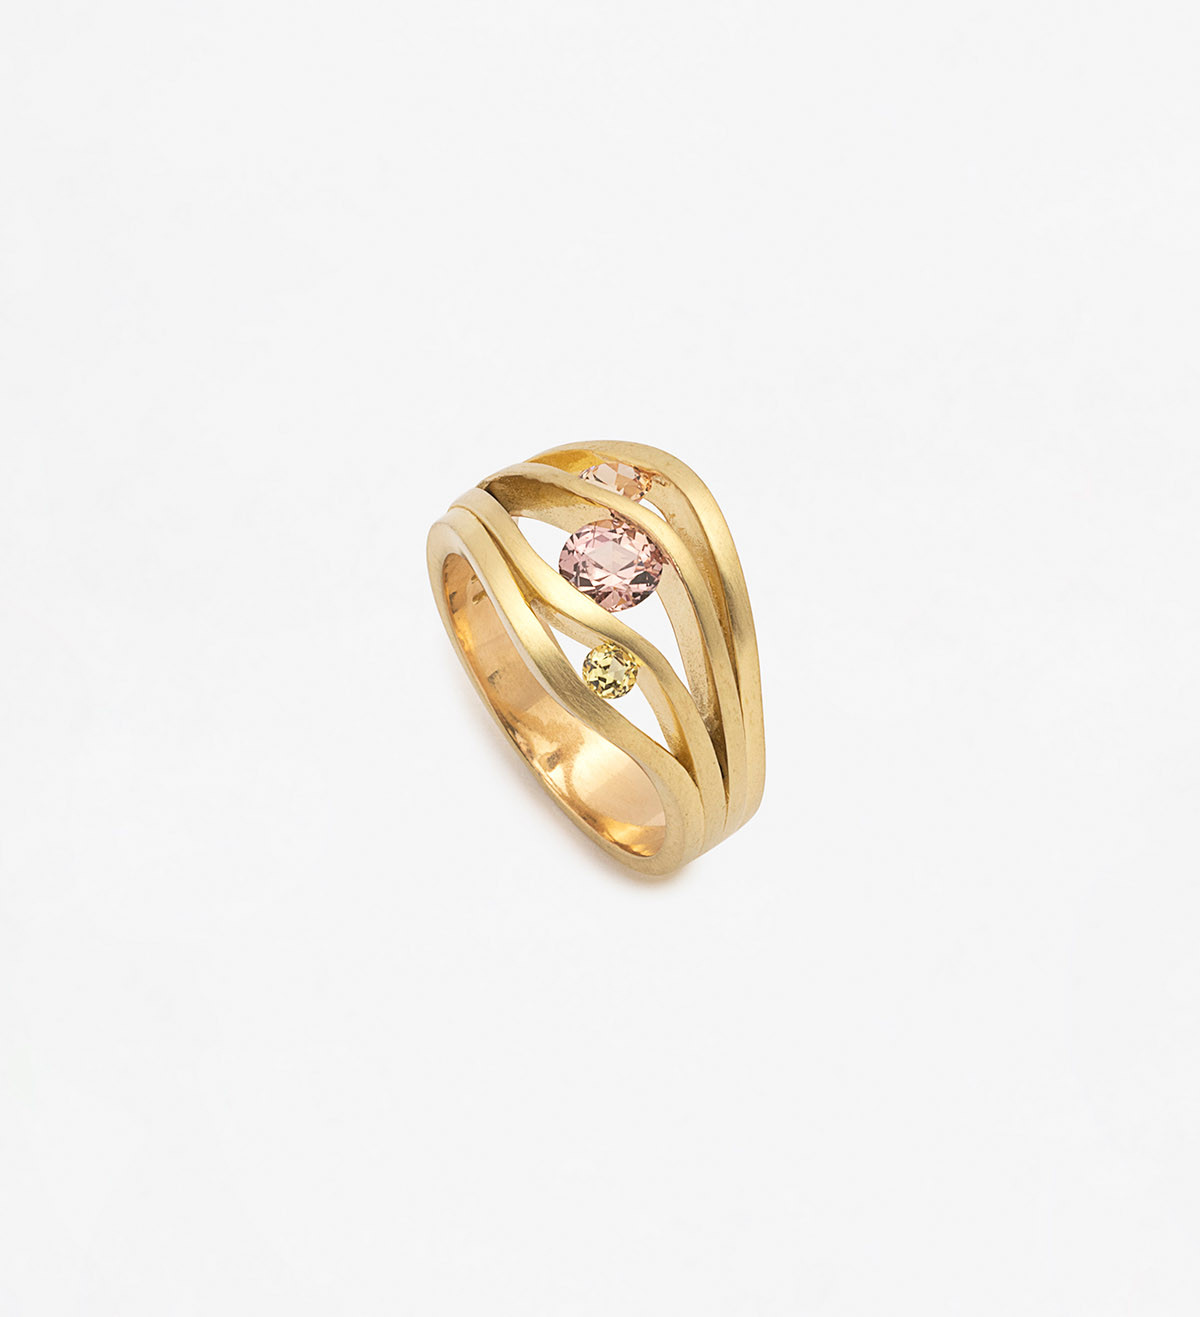 18k gold ring with orange sapphires Wennick-Lefèvre 0.73ct